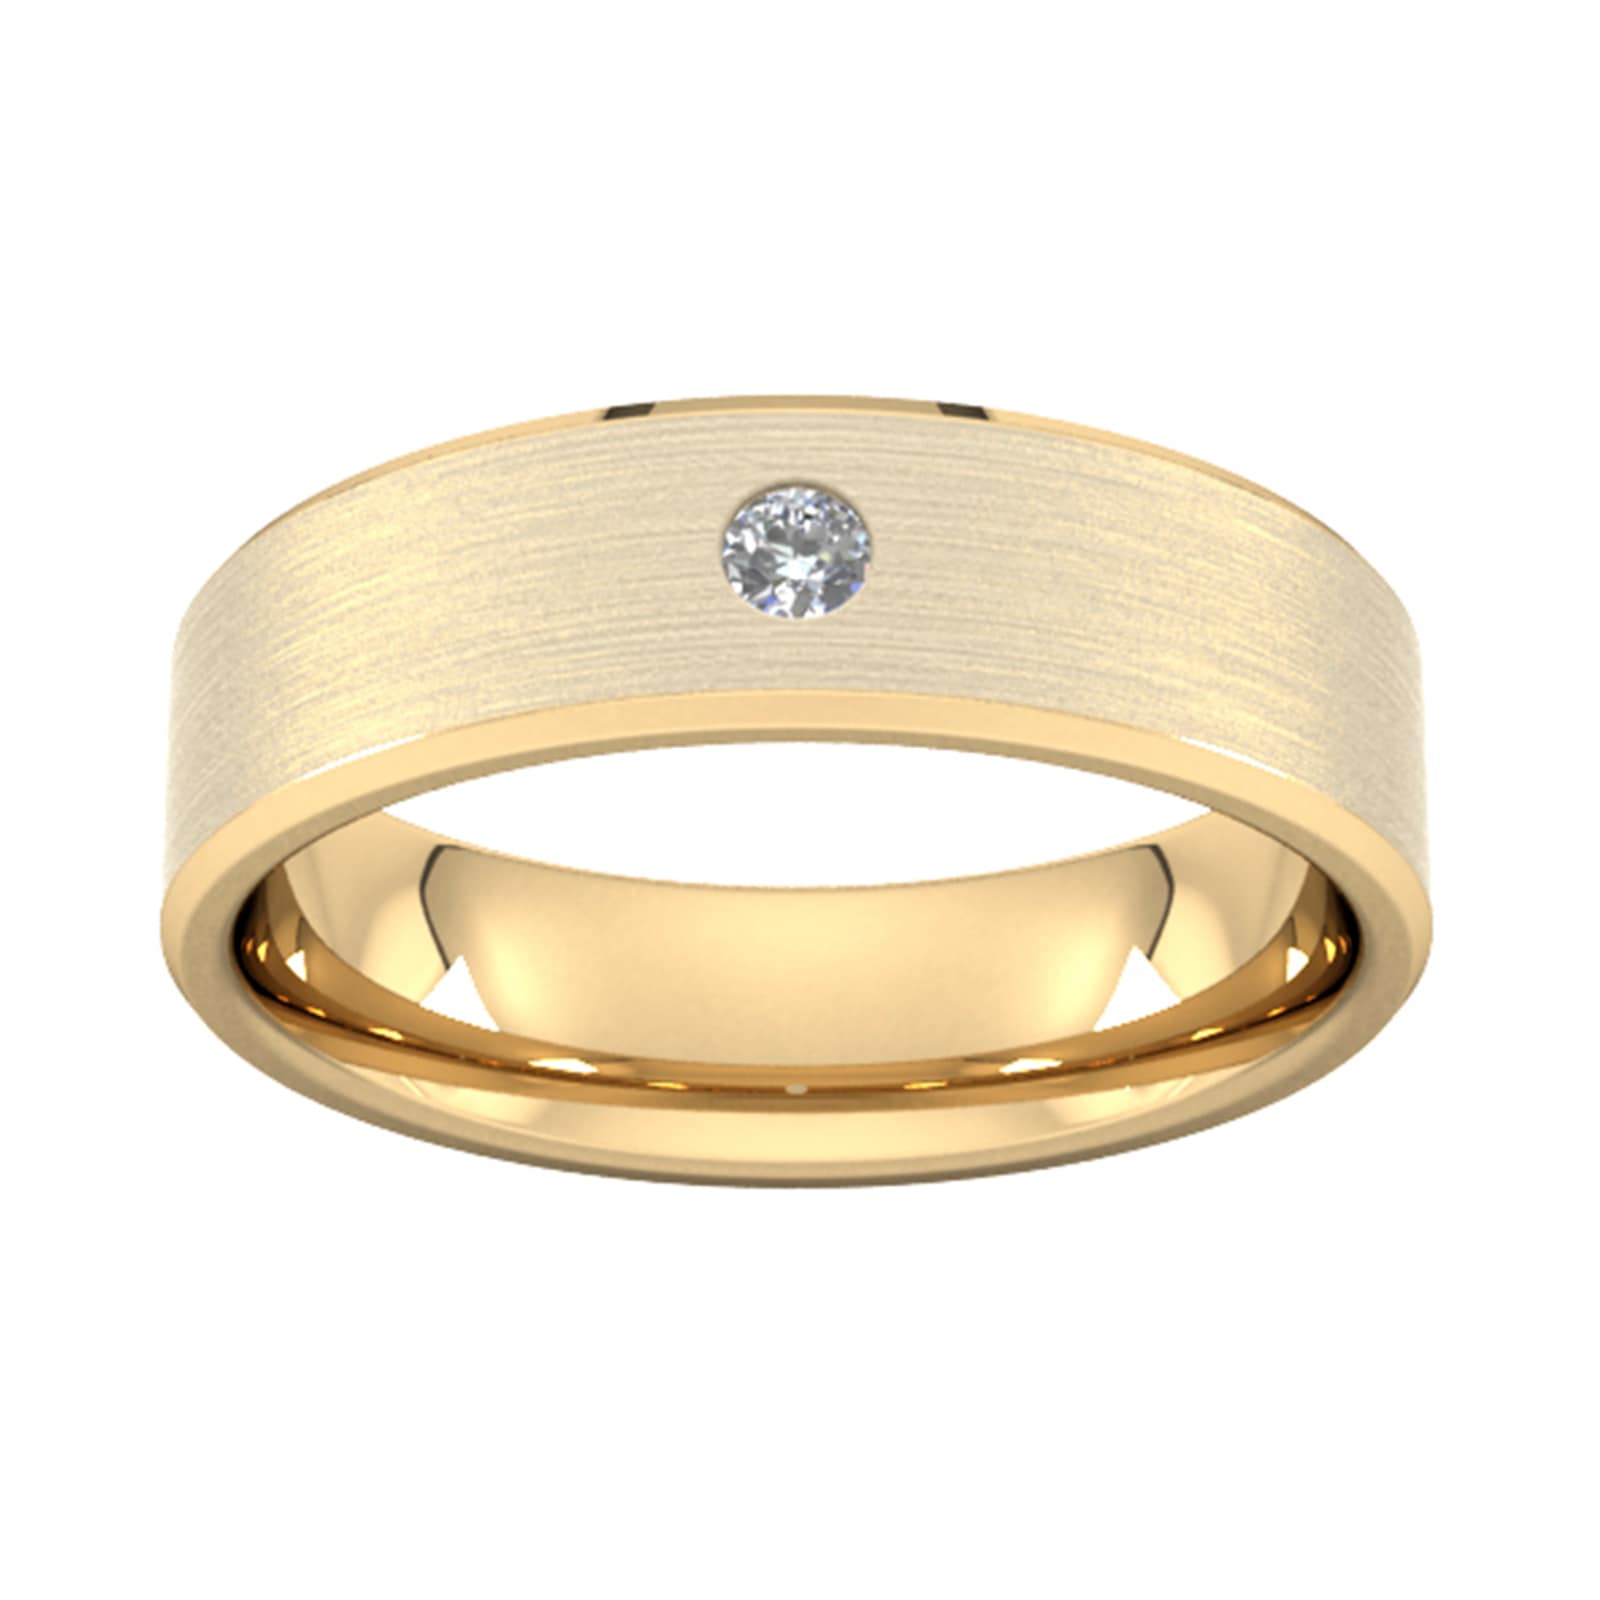 6mm Brilliant Cut Diamond Set Chamfered Edge Wedding Ring In 9 Carat Yellow Gold - Ring Size K